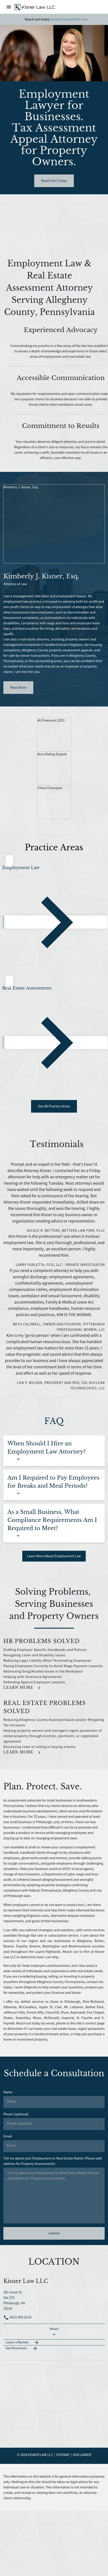 Kisner Law Firm, LLC - Pittsburgh PA Lawyers